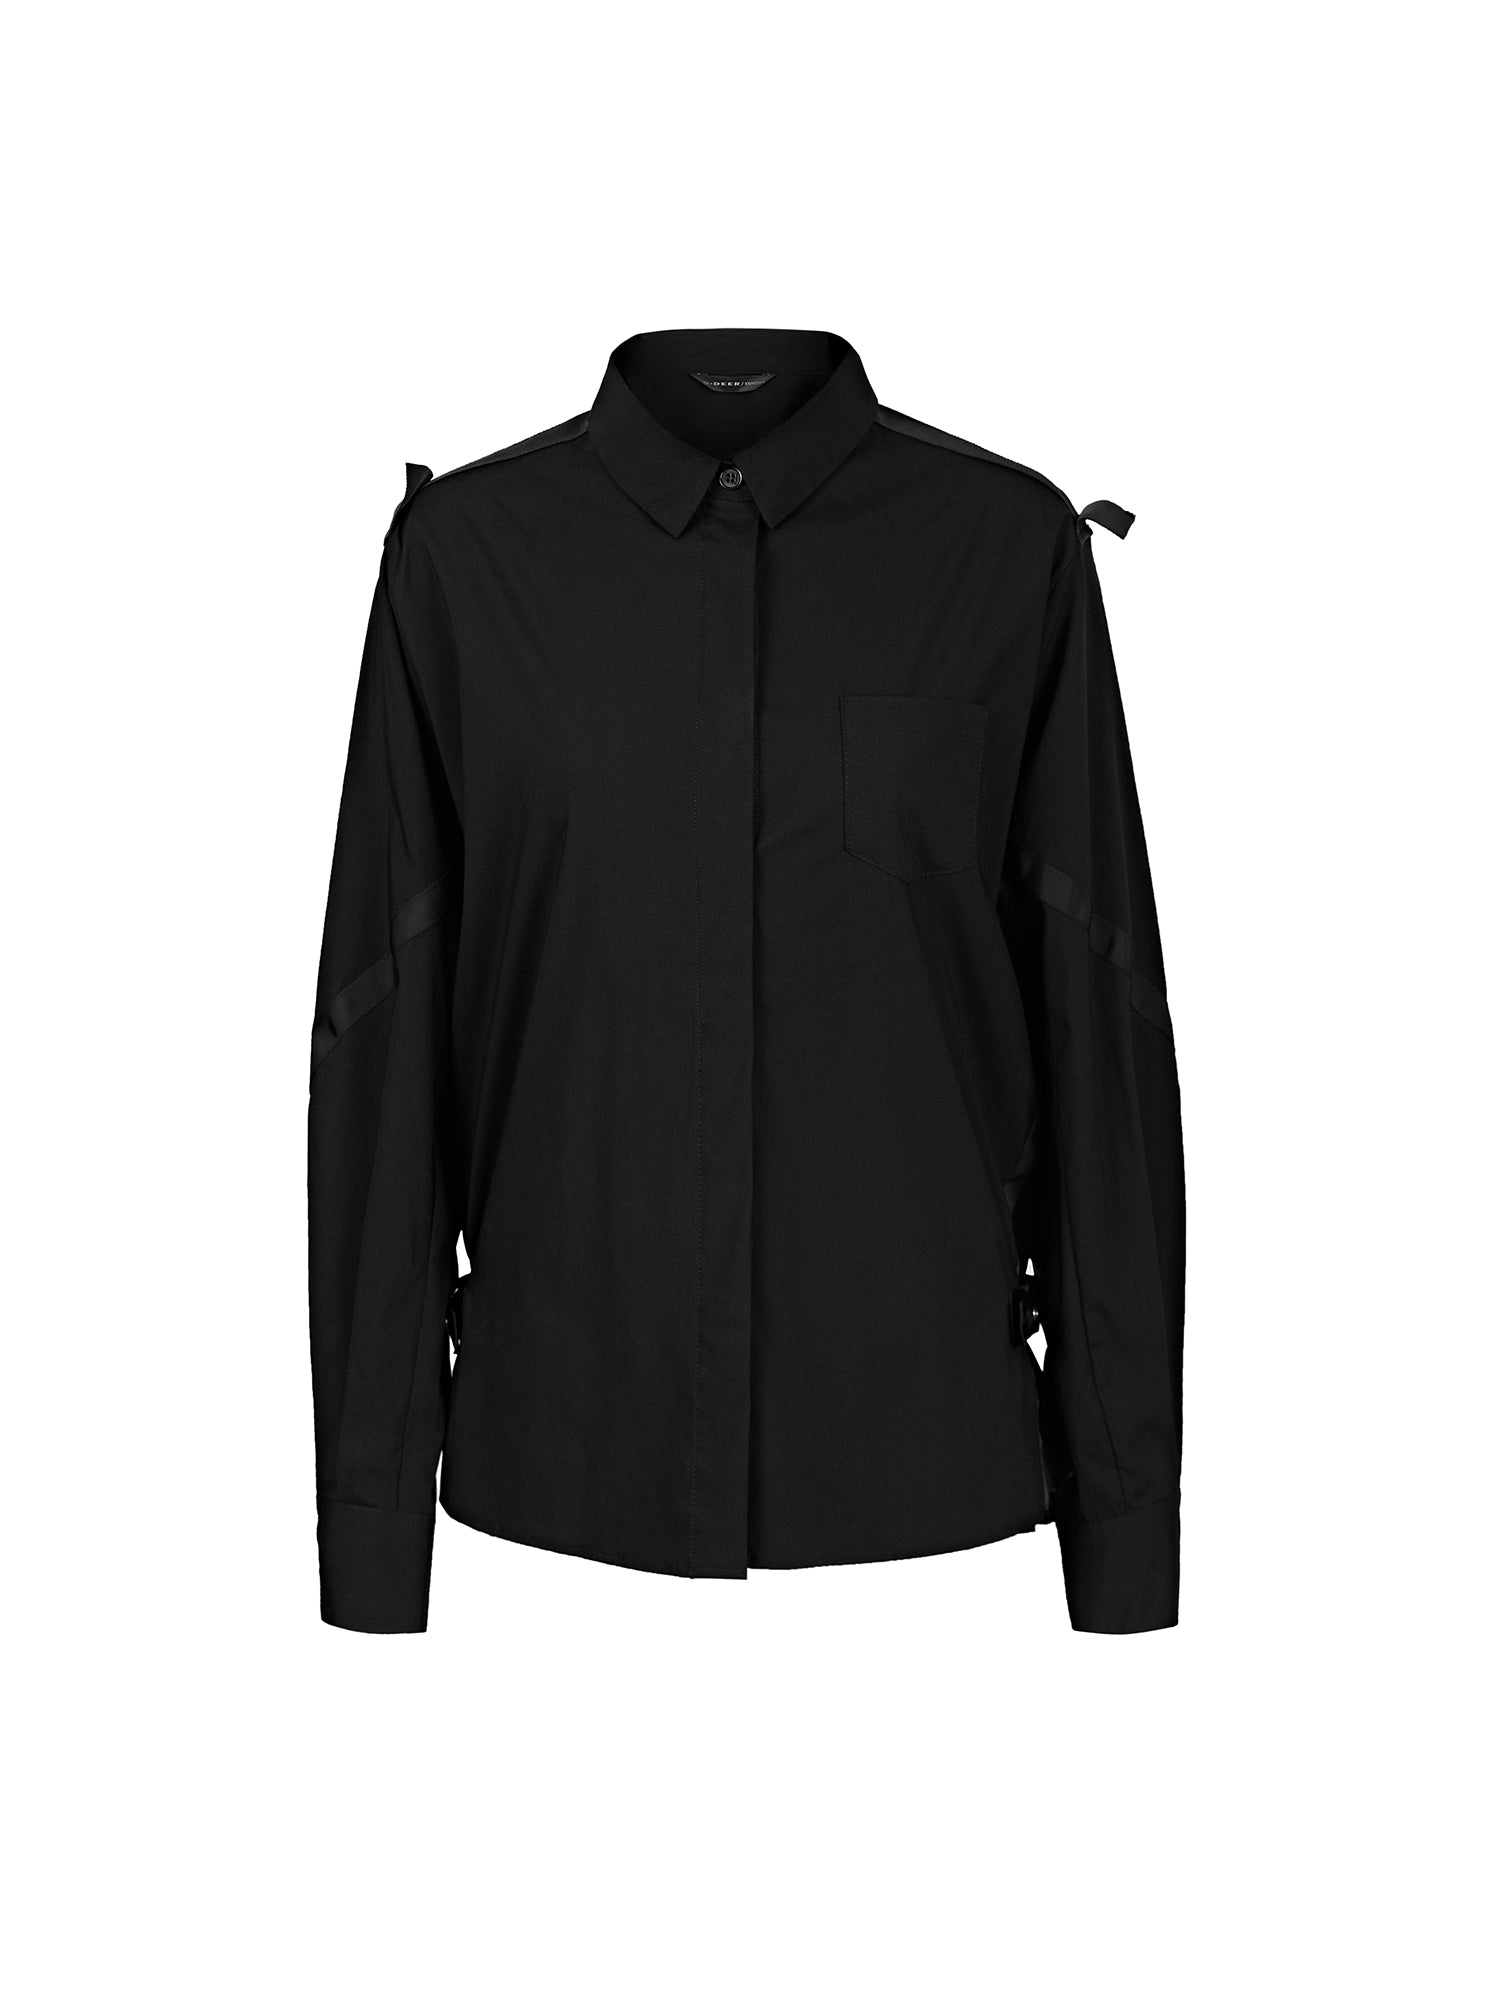 Casual Lapel Webbing Stitching Black Long-Sleeved Shirt